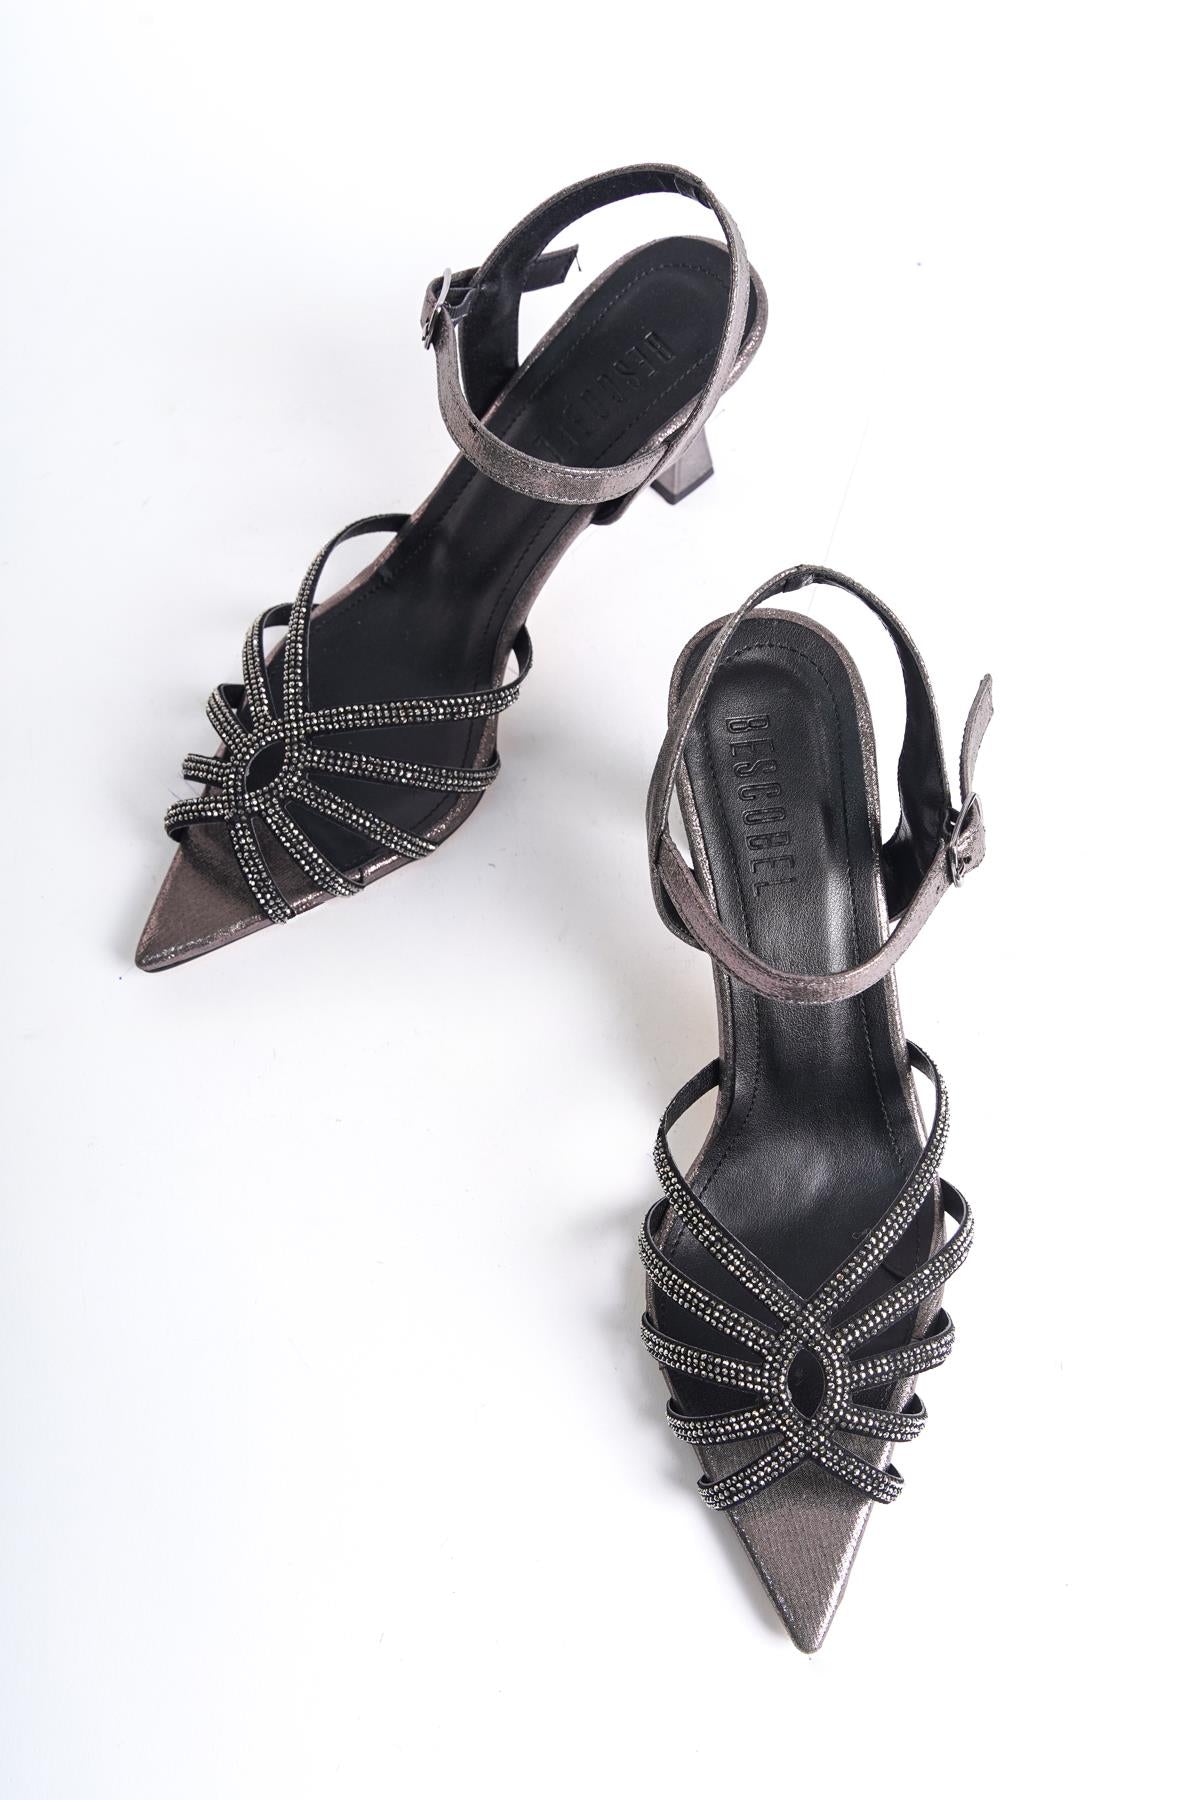 Women's Platinum Thin Heel Pointed Toe Evening Dress Shoes 8 Cm Heel - STREETMODE™